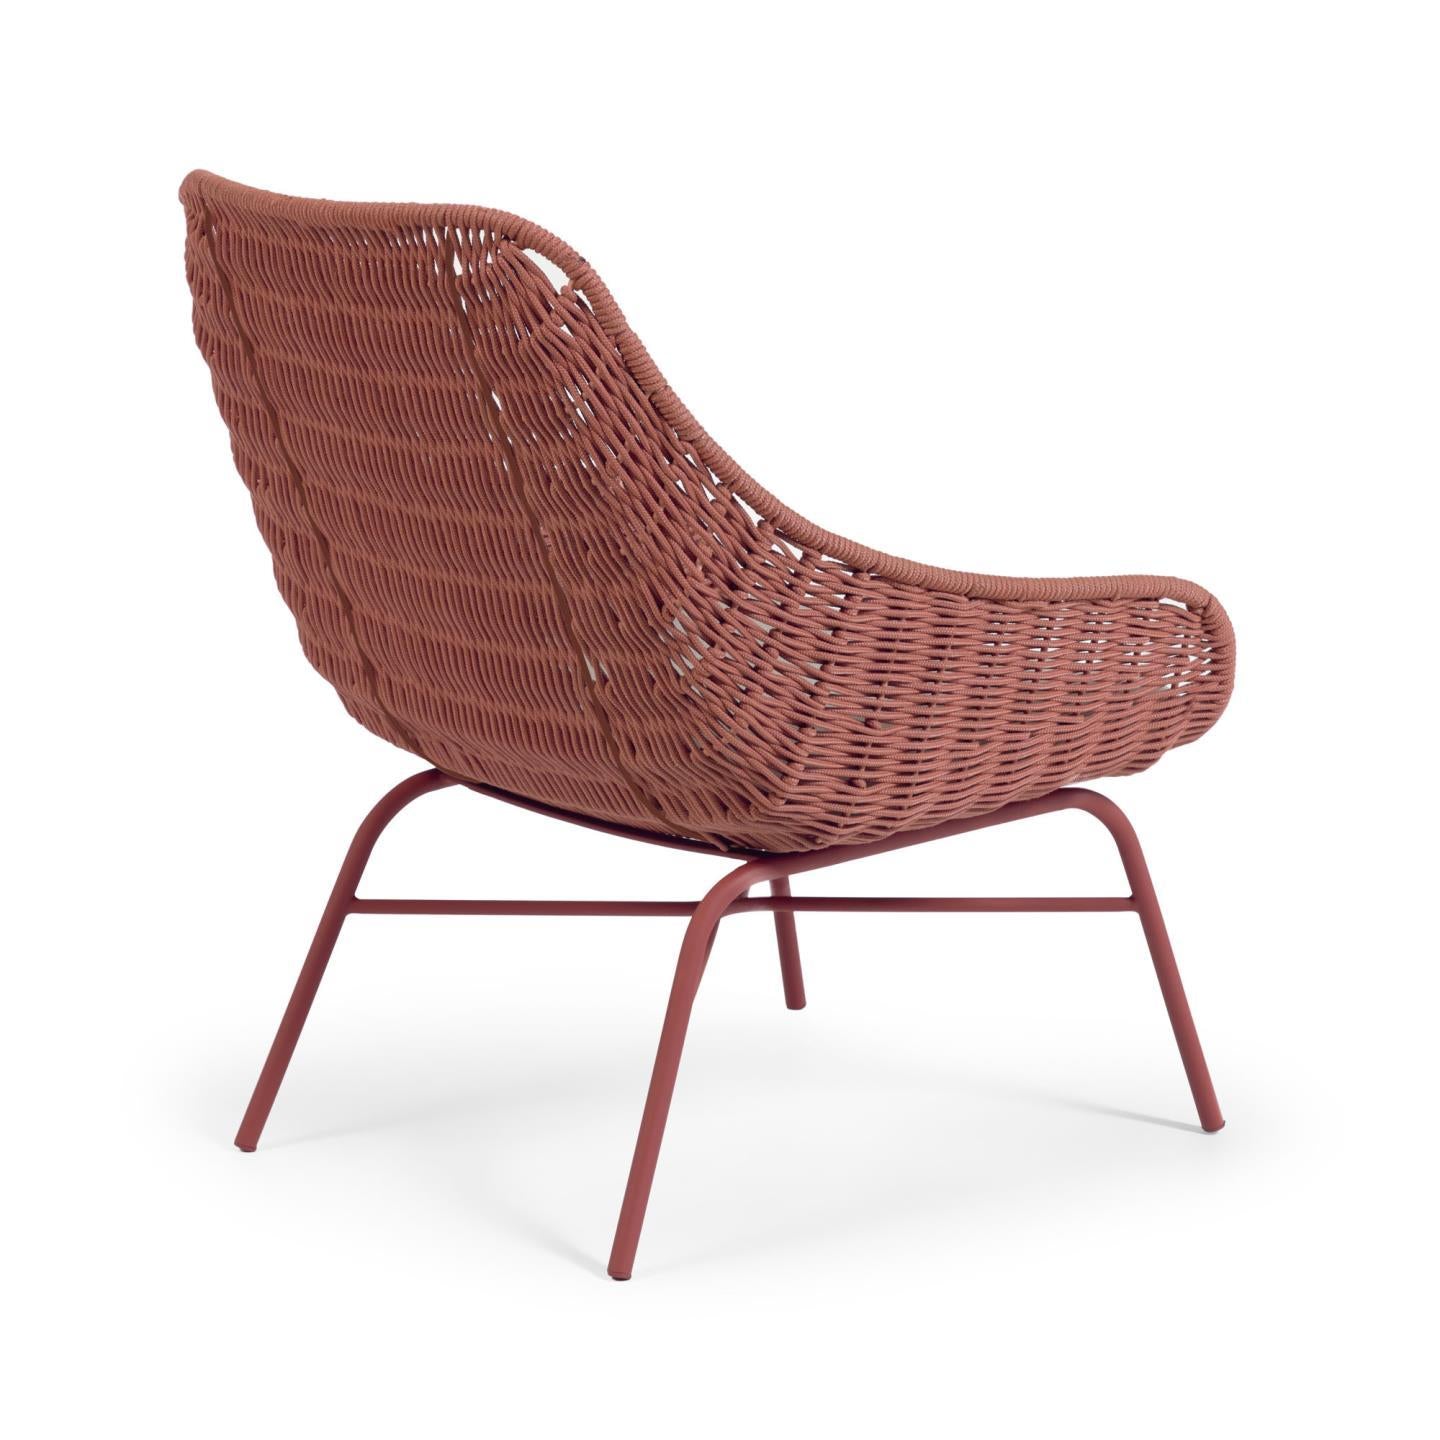 Abeli terracotta cord armchair with galvanised steel legs.